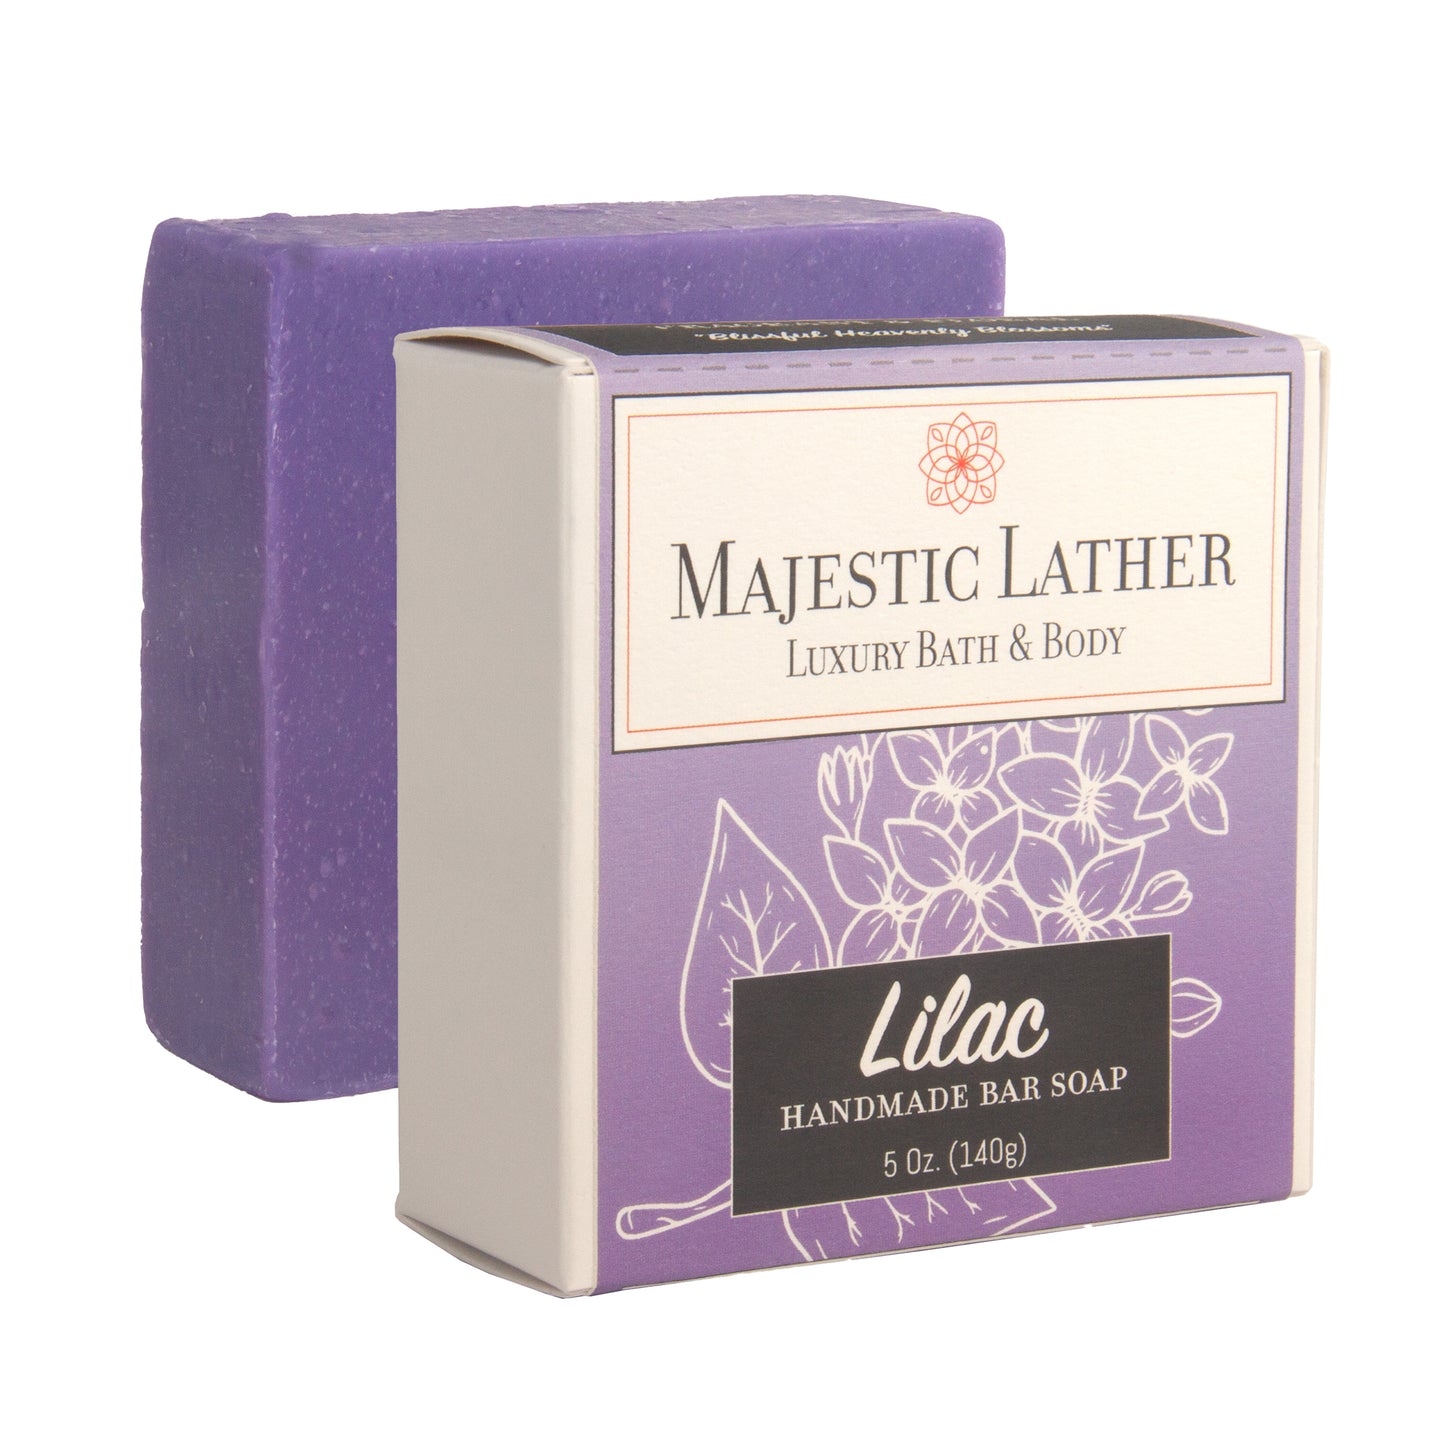 Majestic Lather Lilac Handmade Bar Soap & Box